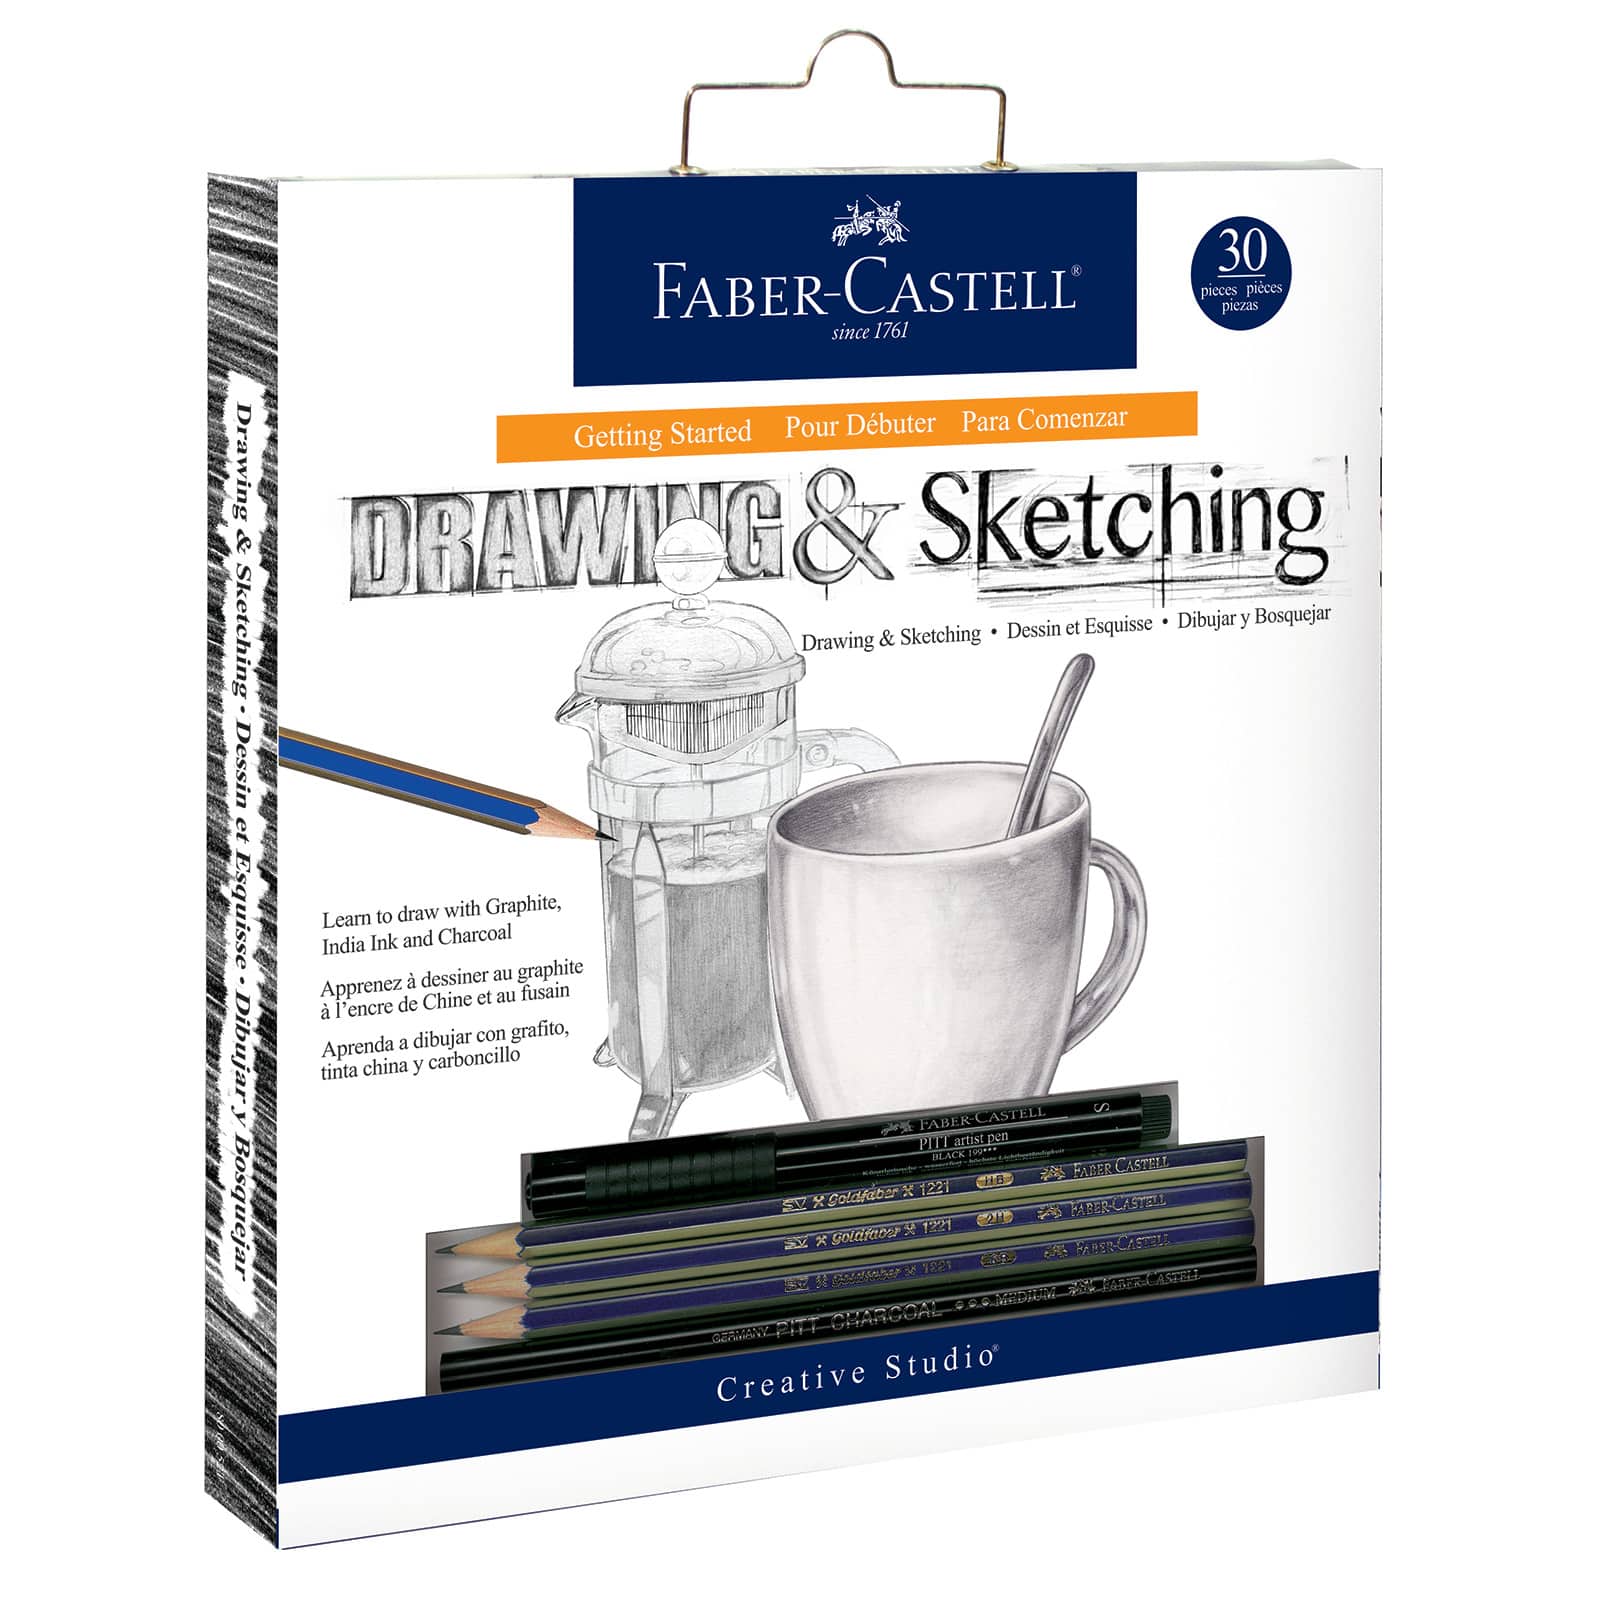 Faber Castell Sketching Basics Set